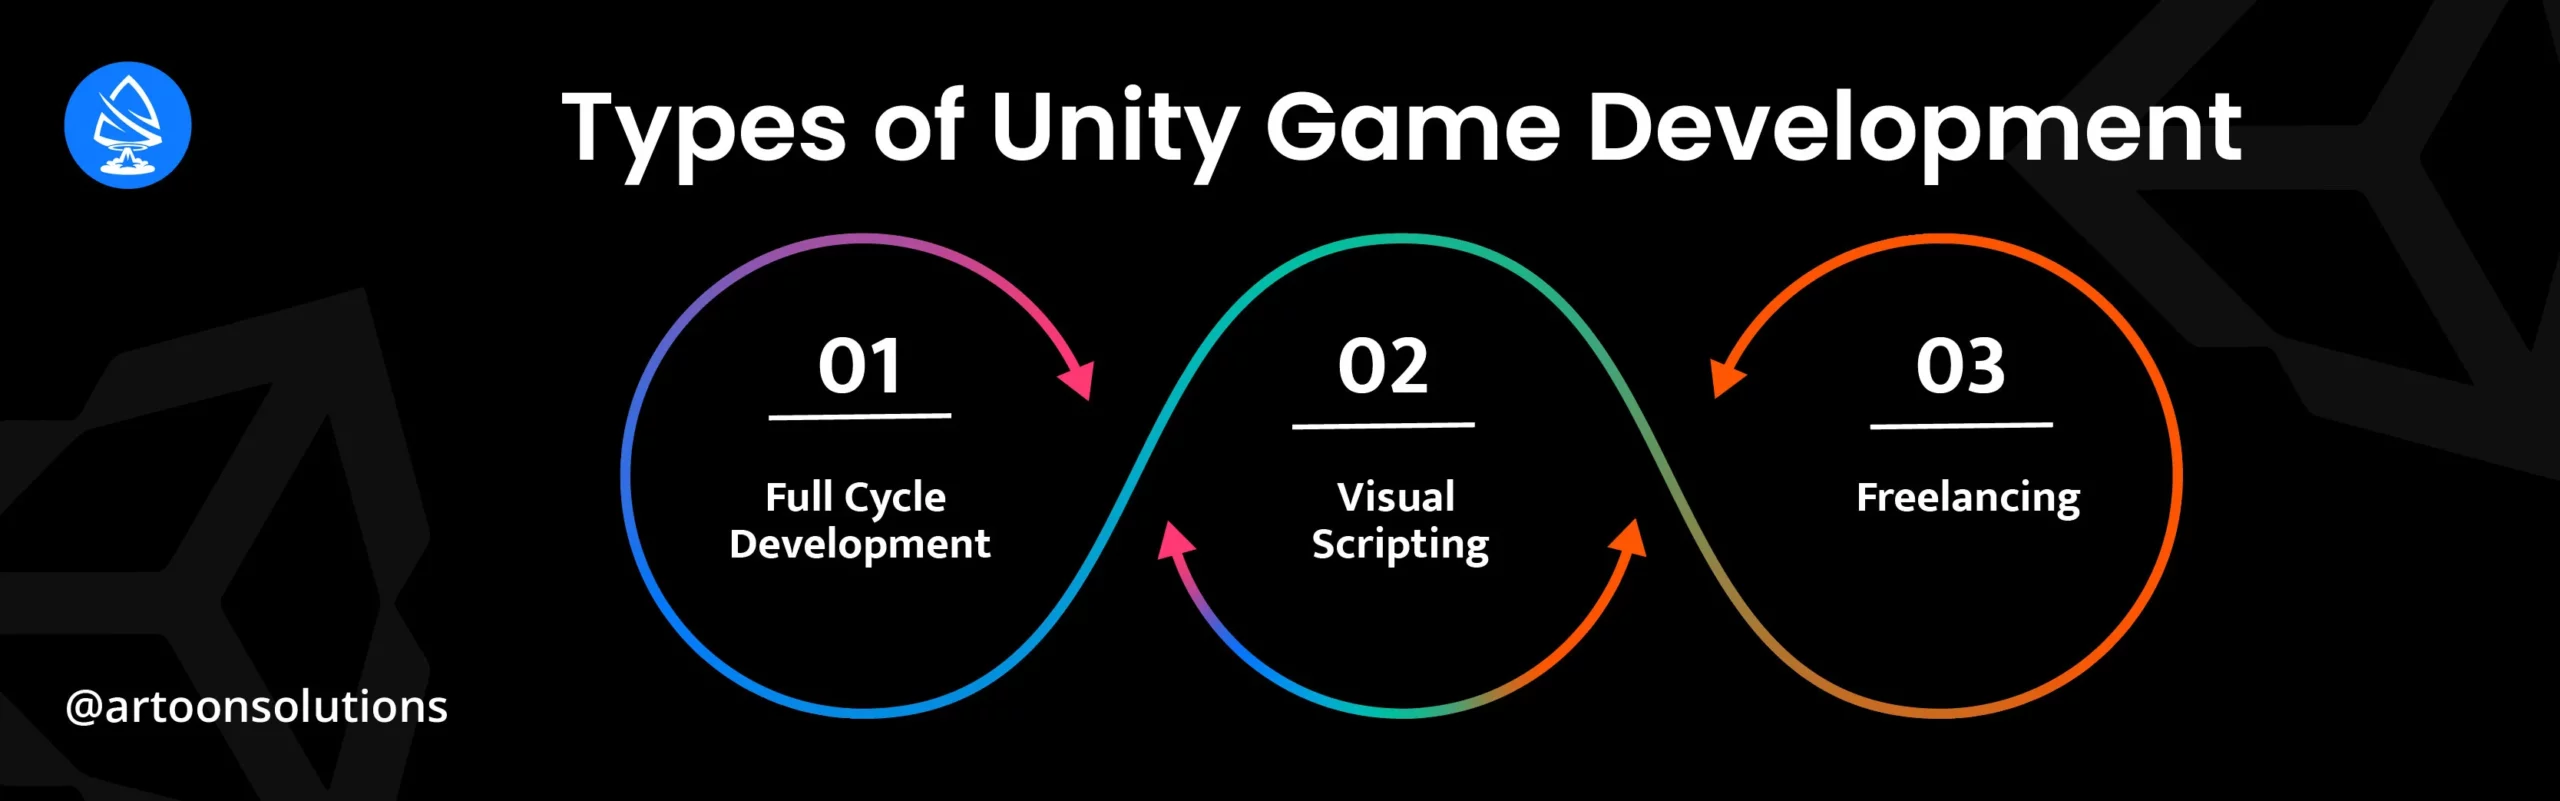 Types of Unity Game Development